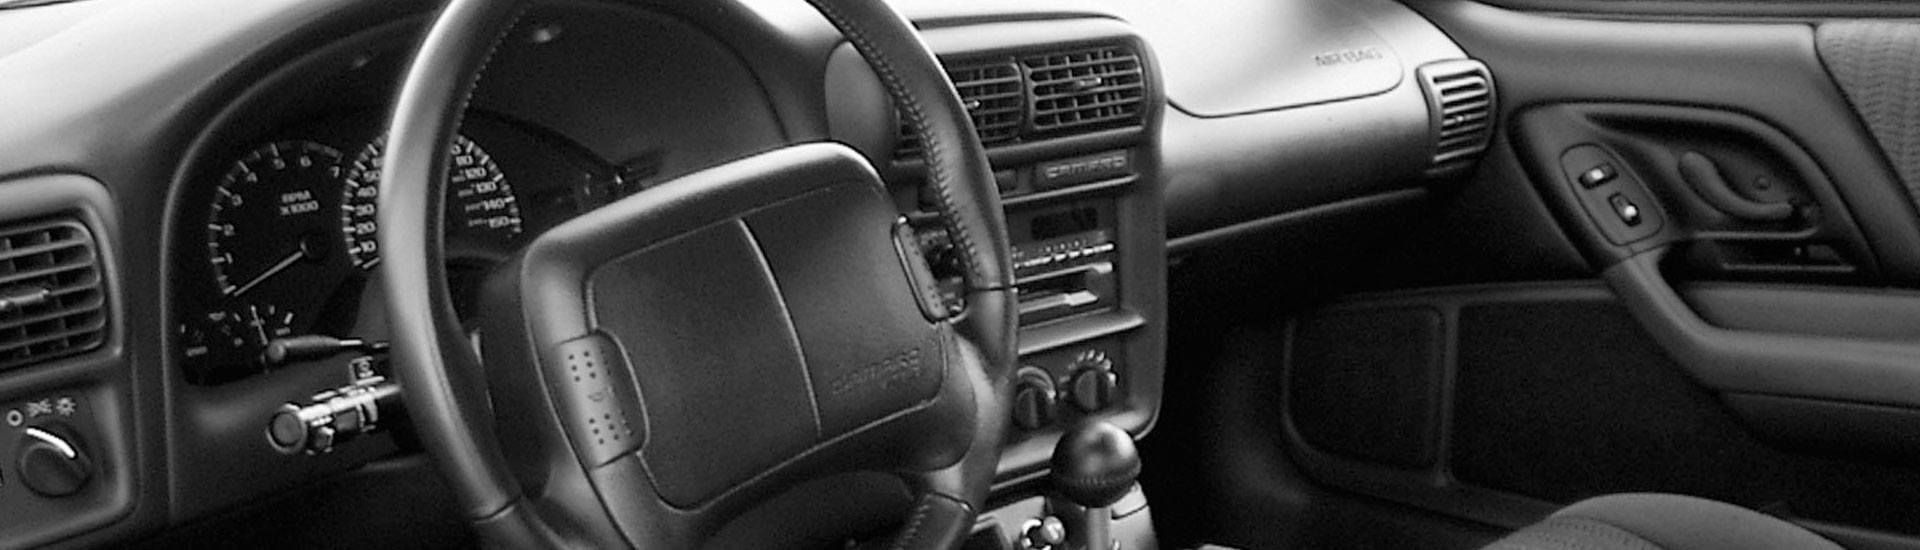 1998 Chevrolet Camaro Dash Kits